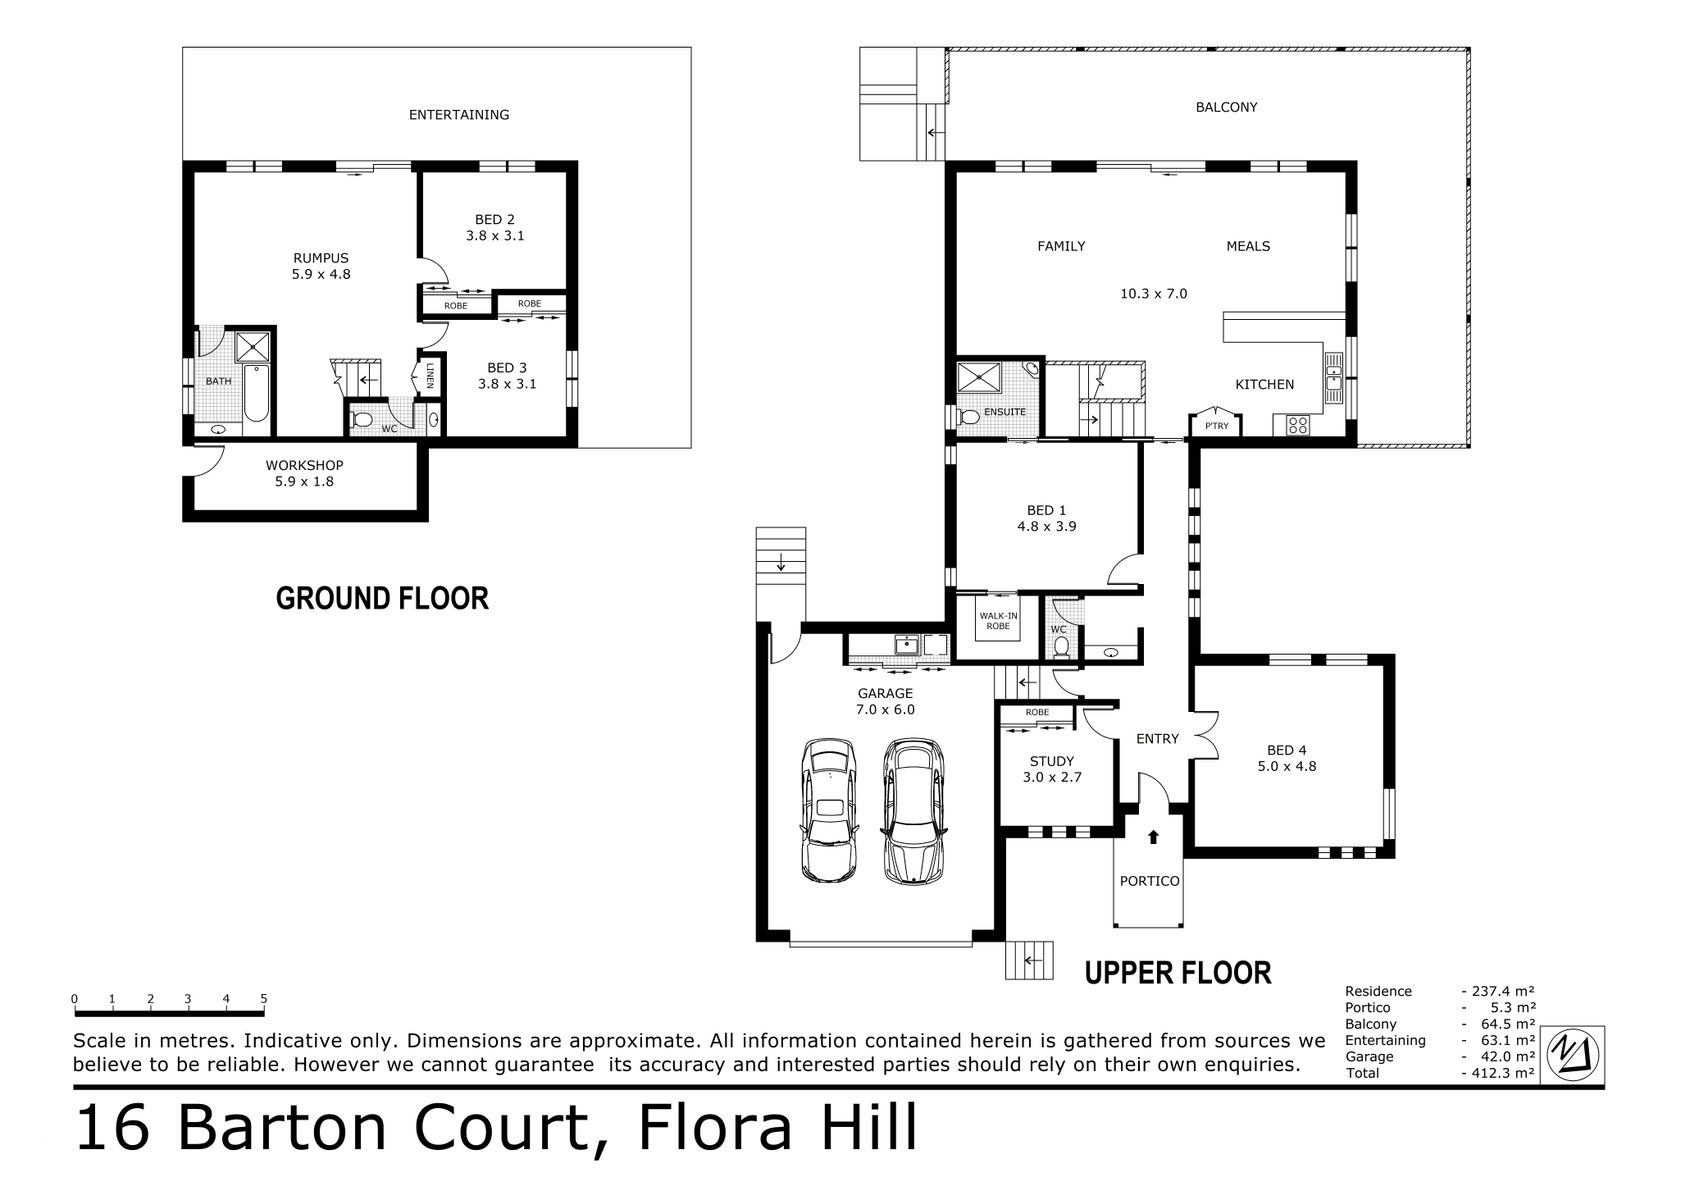 printsize 16 Barton Court Flora Hill Highres 2